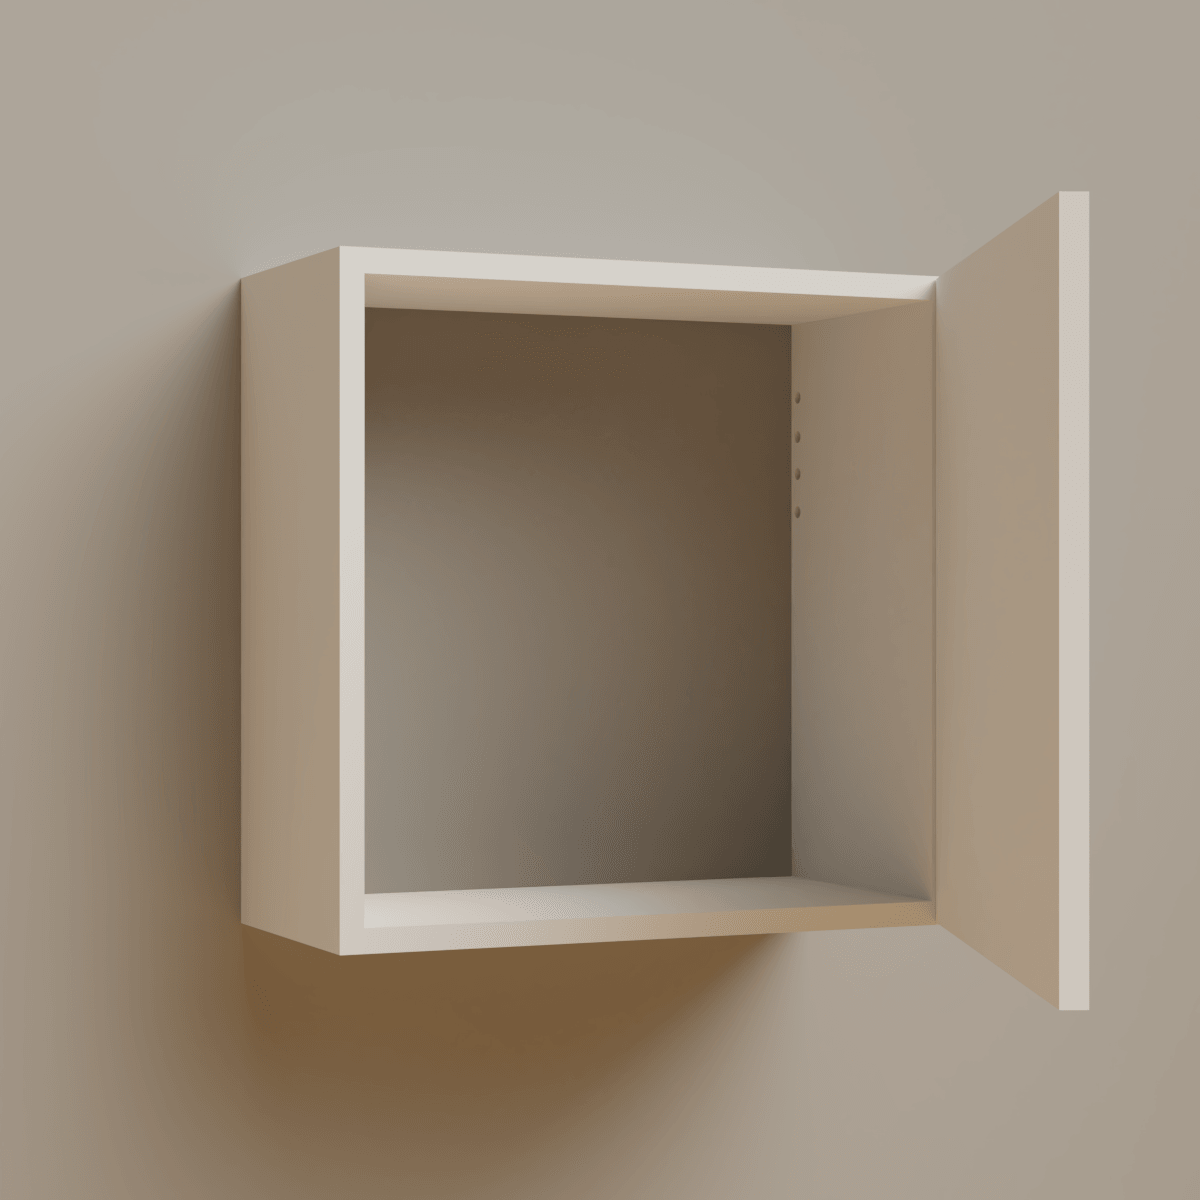 Single Meter Cupboard - The Cabinet Shop